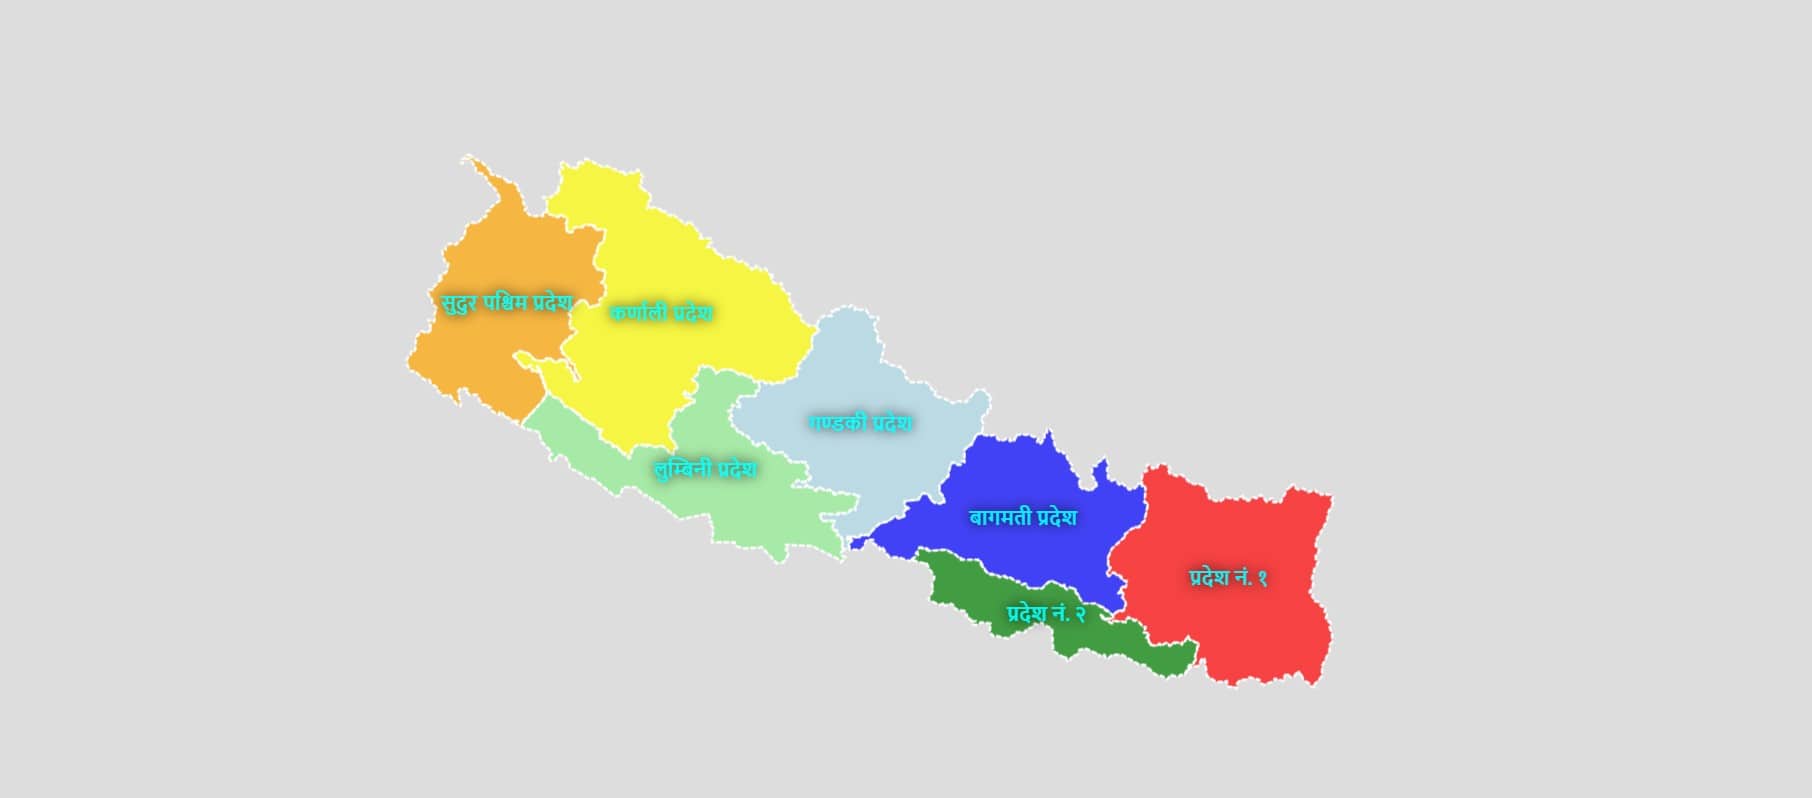 Landline Telephone Area Code (STD Codes) of Nepal